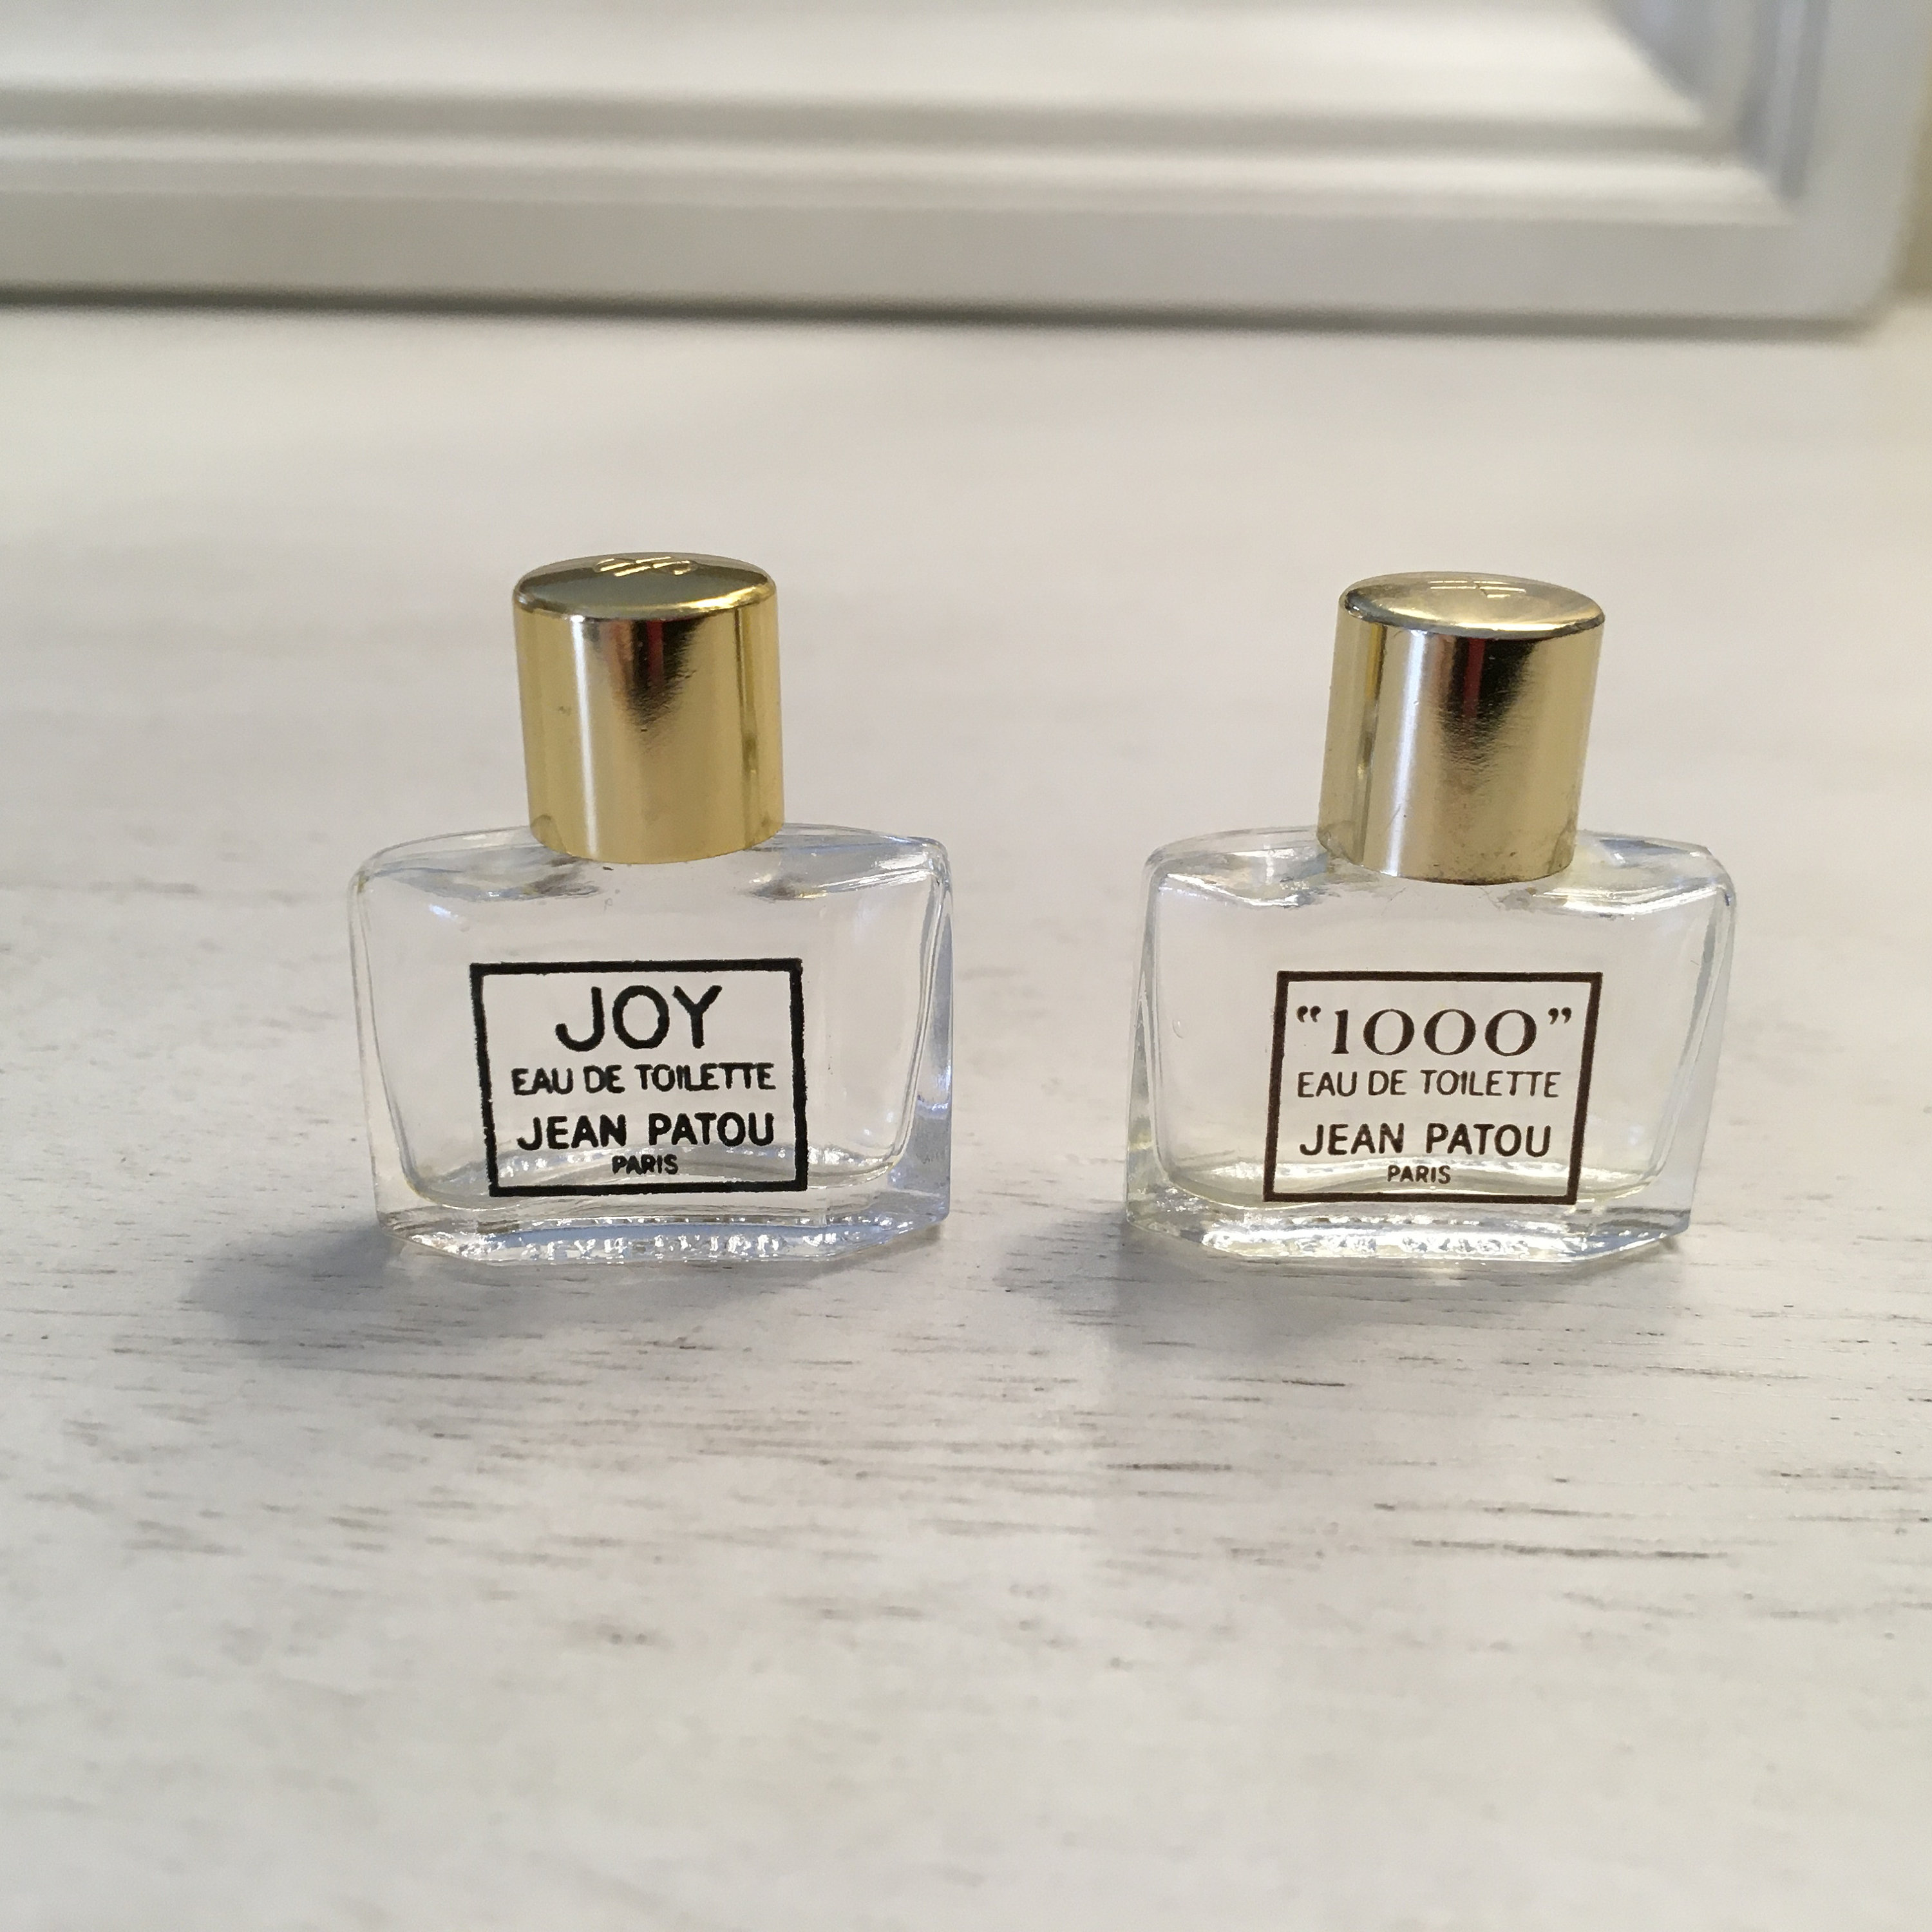 Joy Jean Patou Eau de parfum, Fragrance by LVMH, Luxury Perfume., by  Imperfkt Beauty